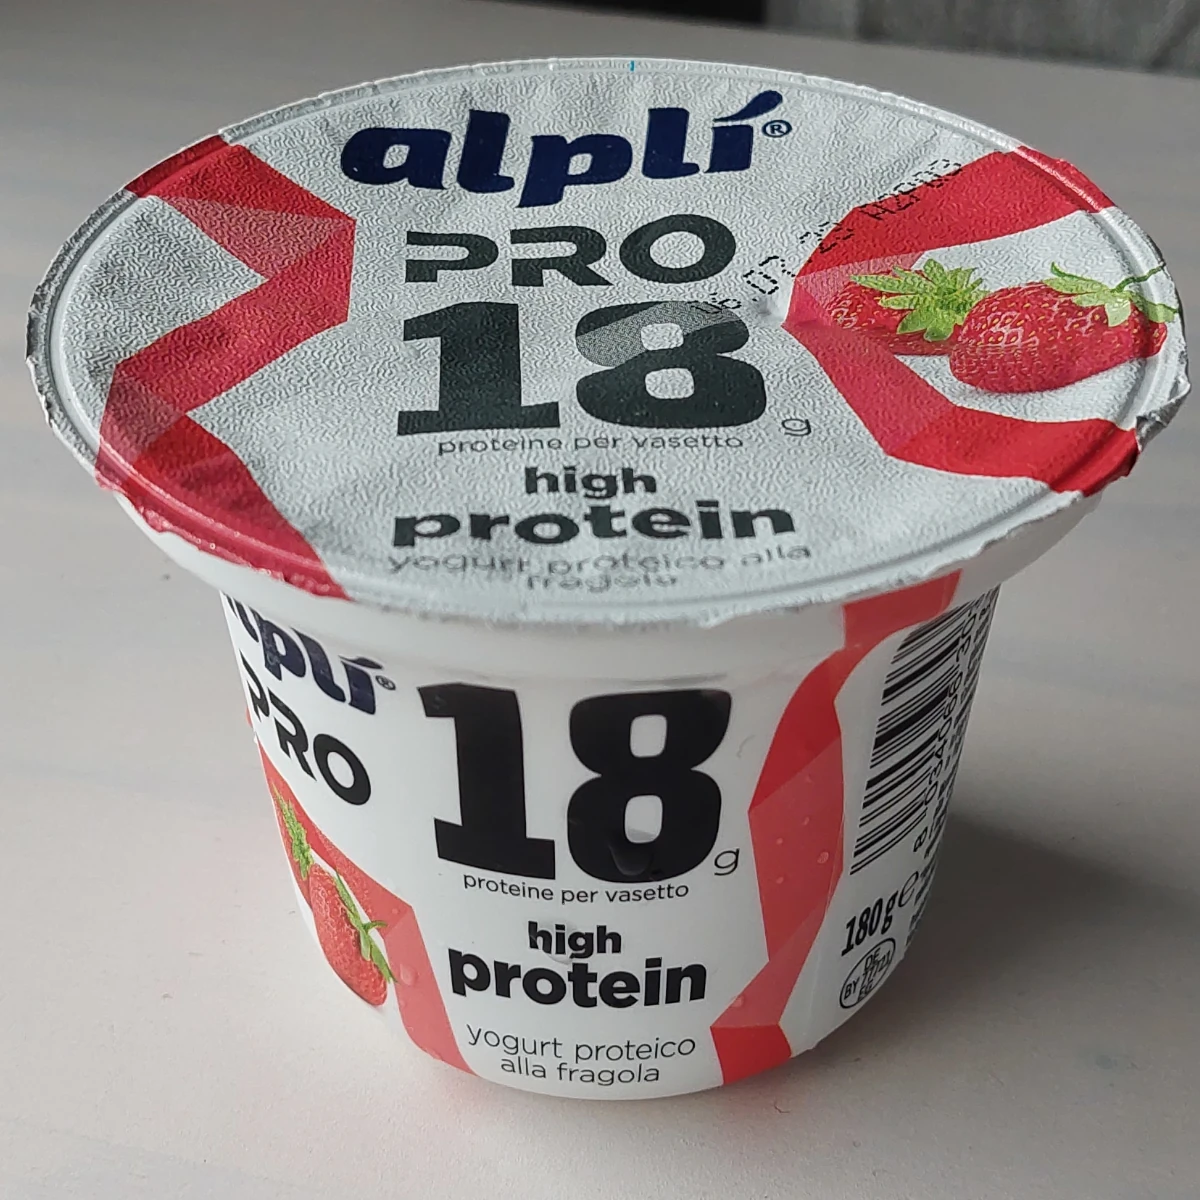 alpli-pro-18-high-protein-yogurt-proteico-ins-fragola